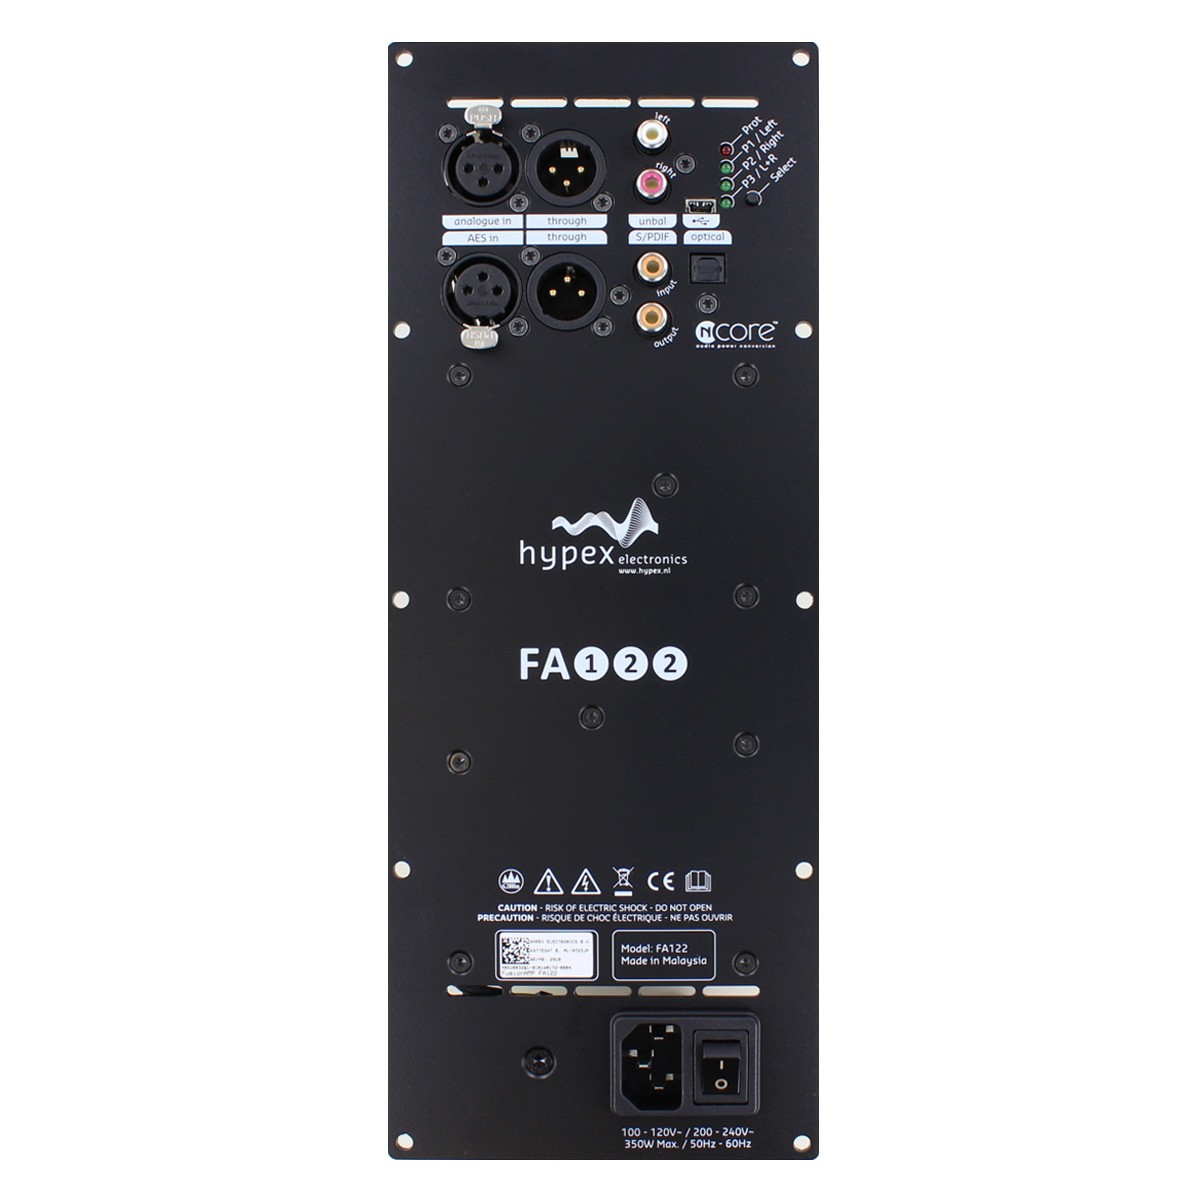 strimmel Omvendt strå HYPEX FUSIONAMP FA122 Plate NCore Amplifier 2x125W DSP ADAU1450 DAC AK4454  192kHz - Audiophonics